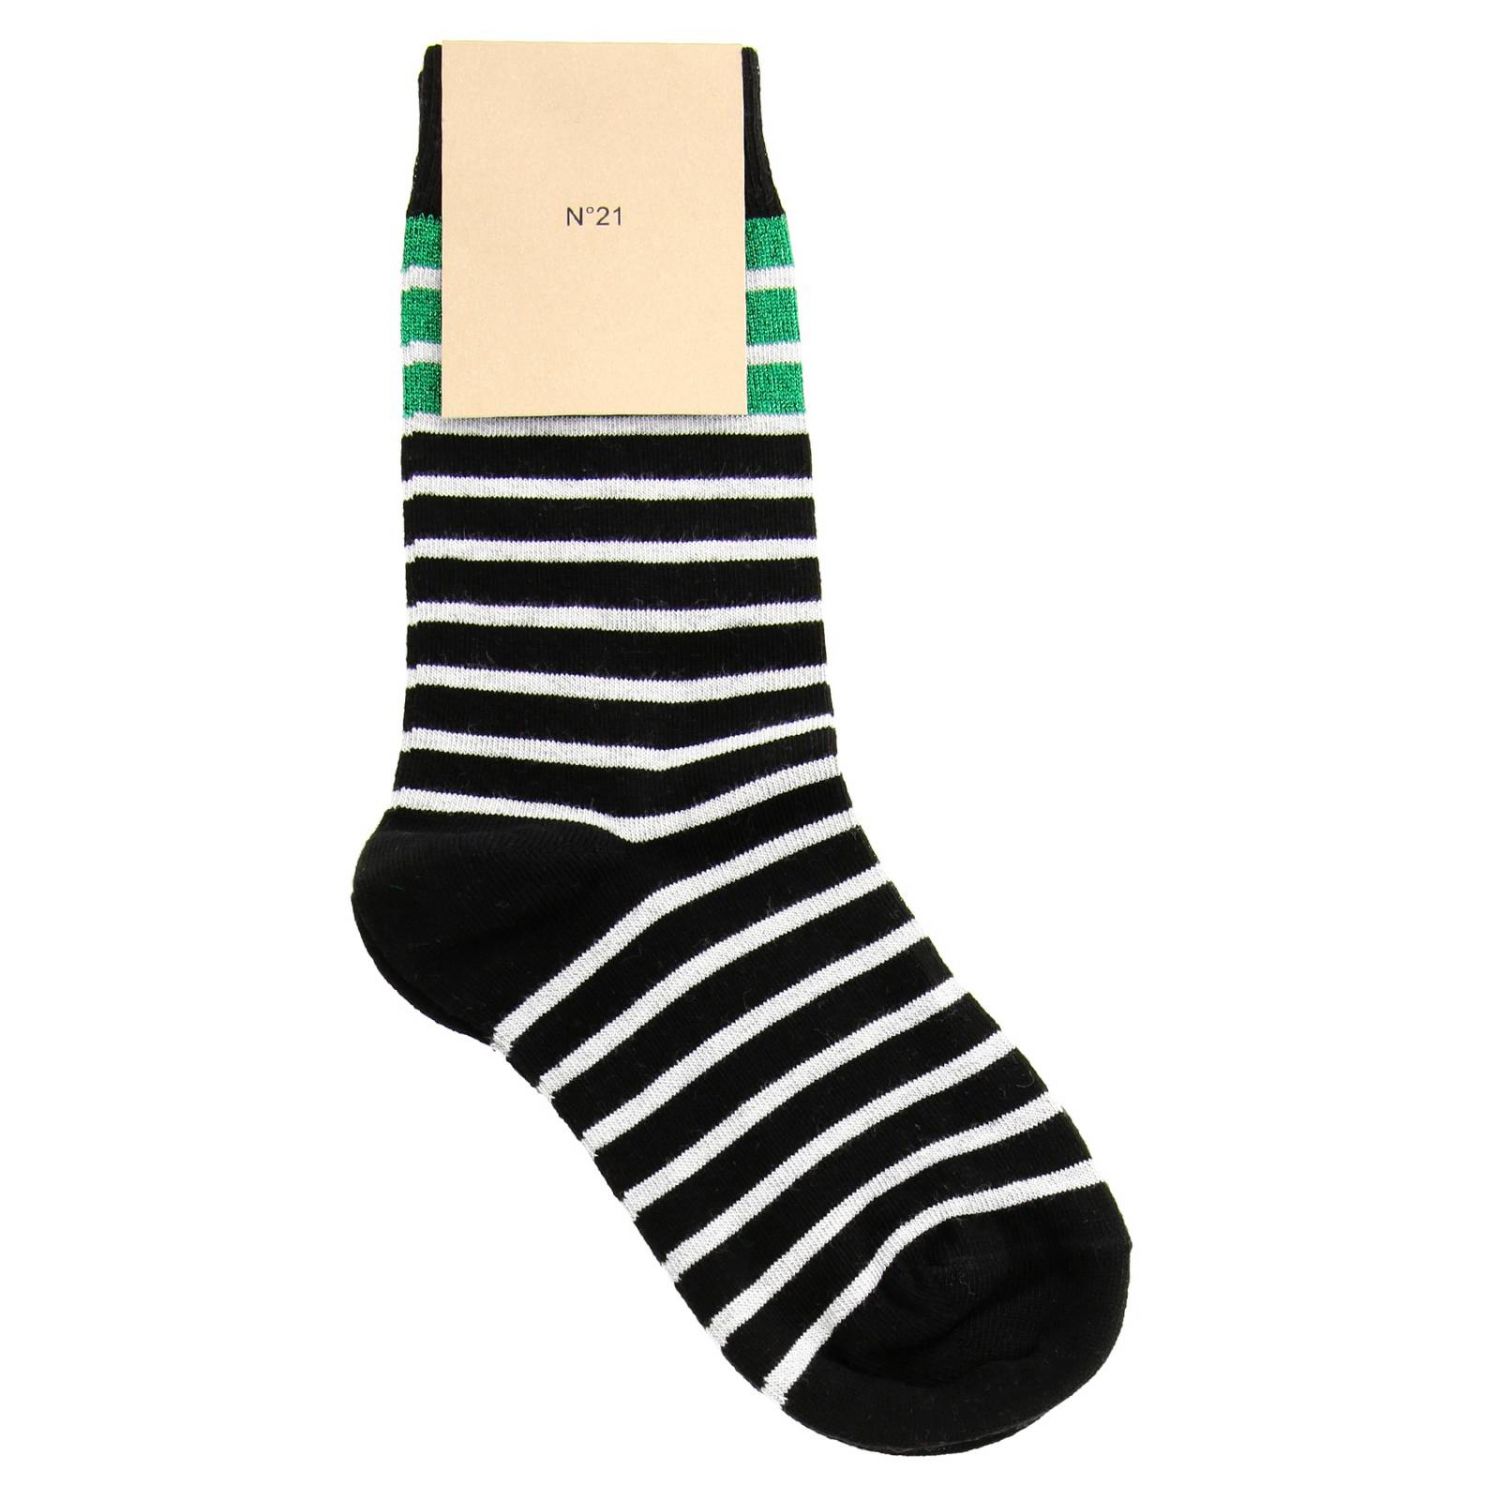 N° 21 Outlet: Socks women | Socks N° 21 Women Black | Socks N° 21 6302 ...